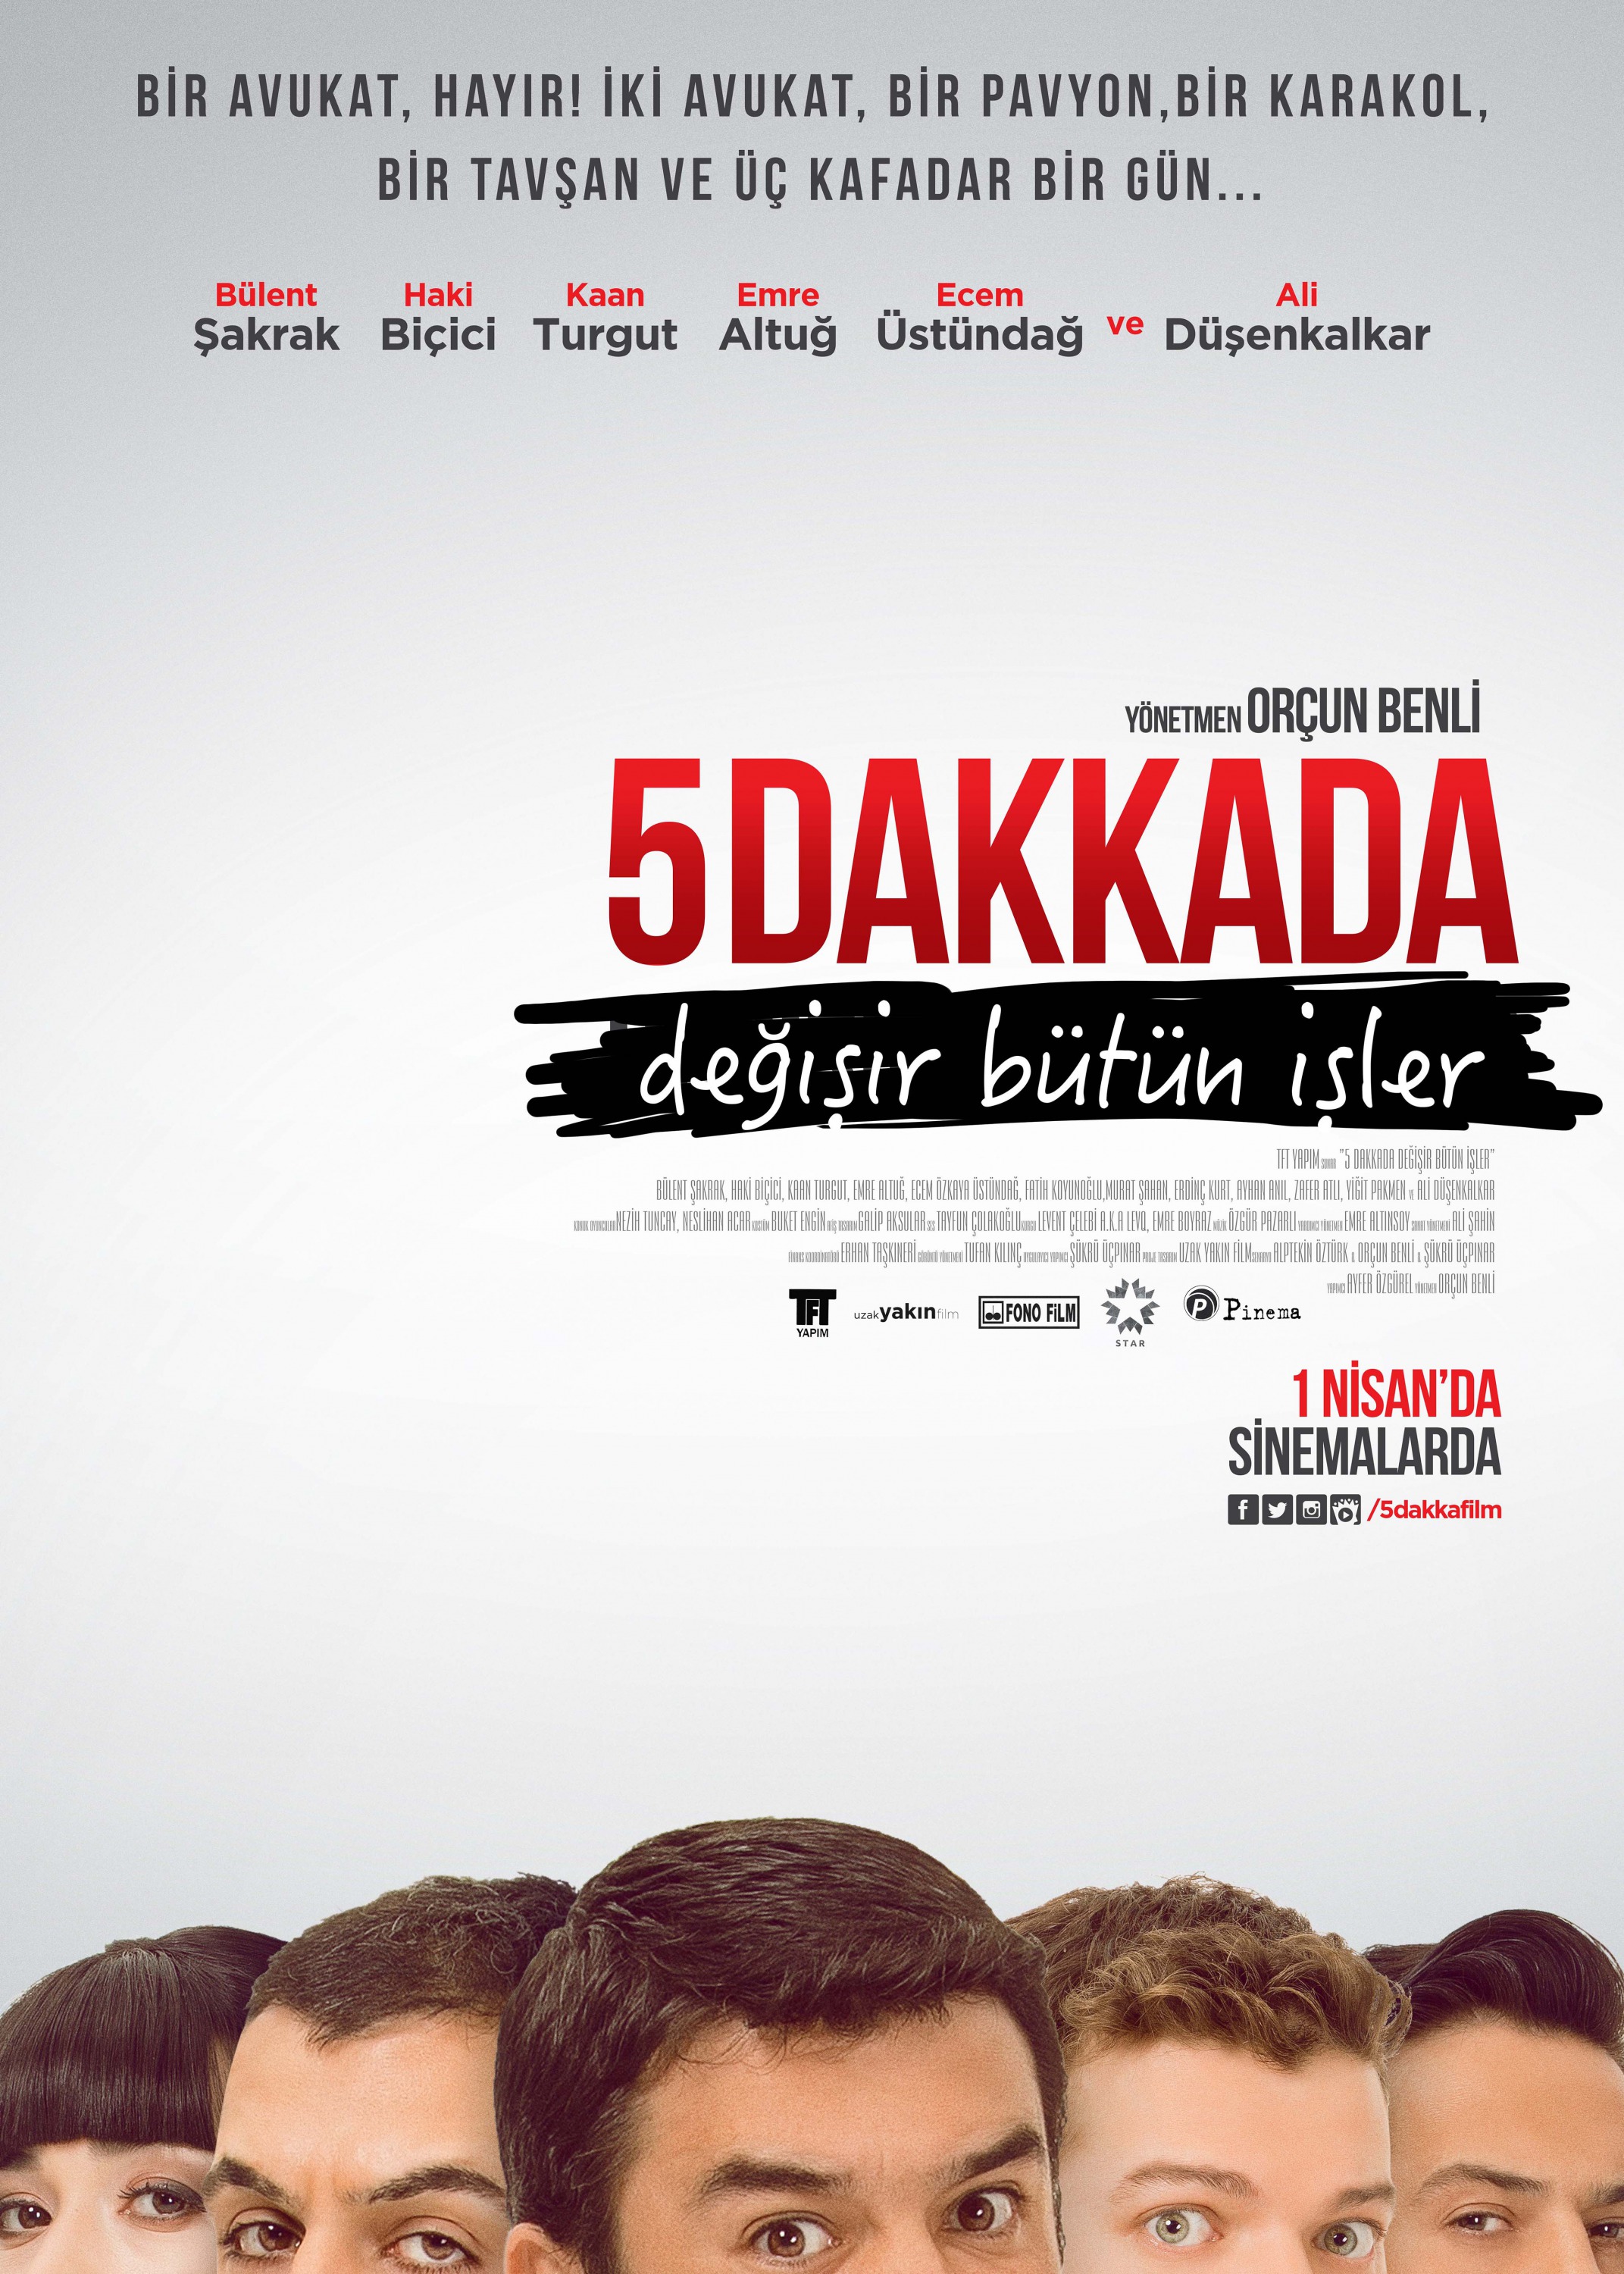 Mega Sized Movie Poster Image for 5 Dakkada Degisir Bütün Isler (#1 of 3)